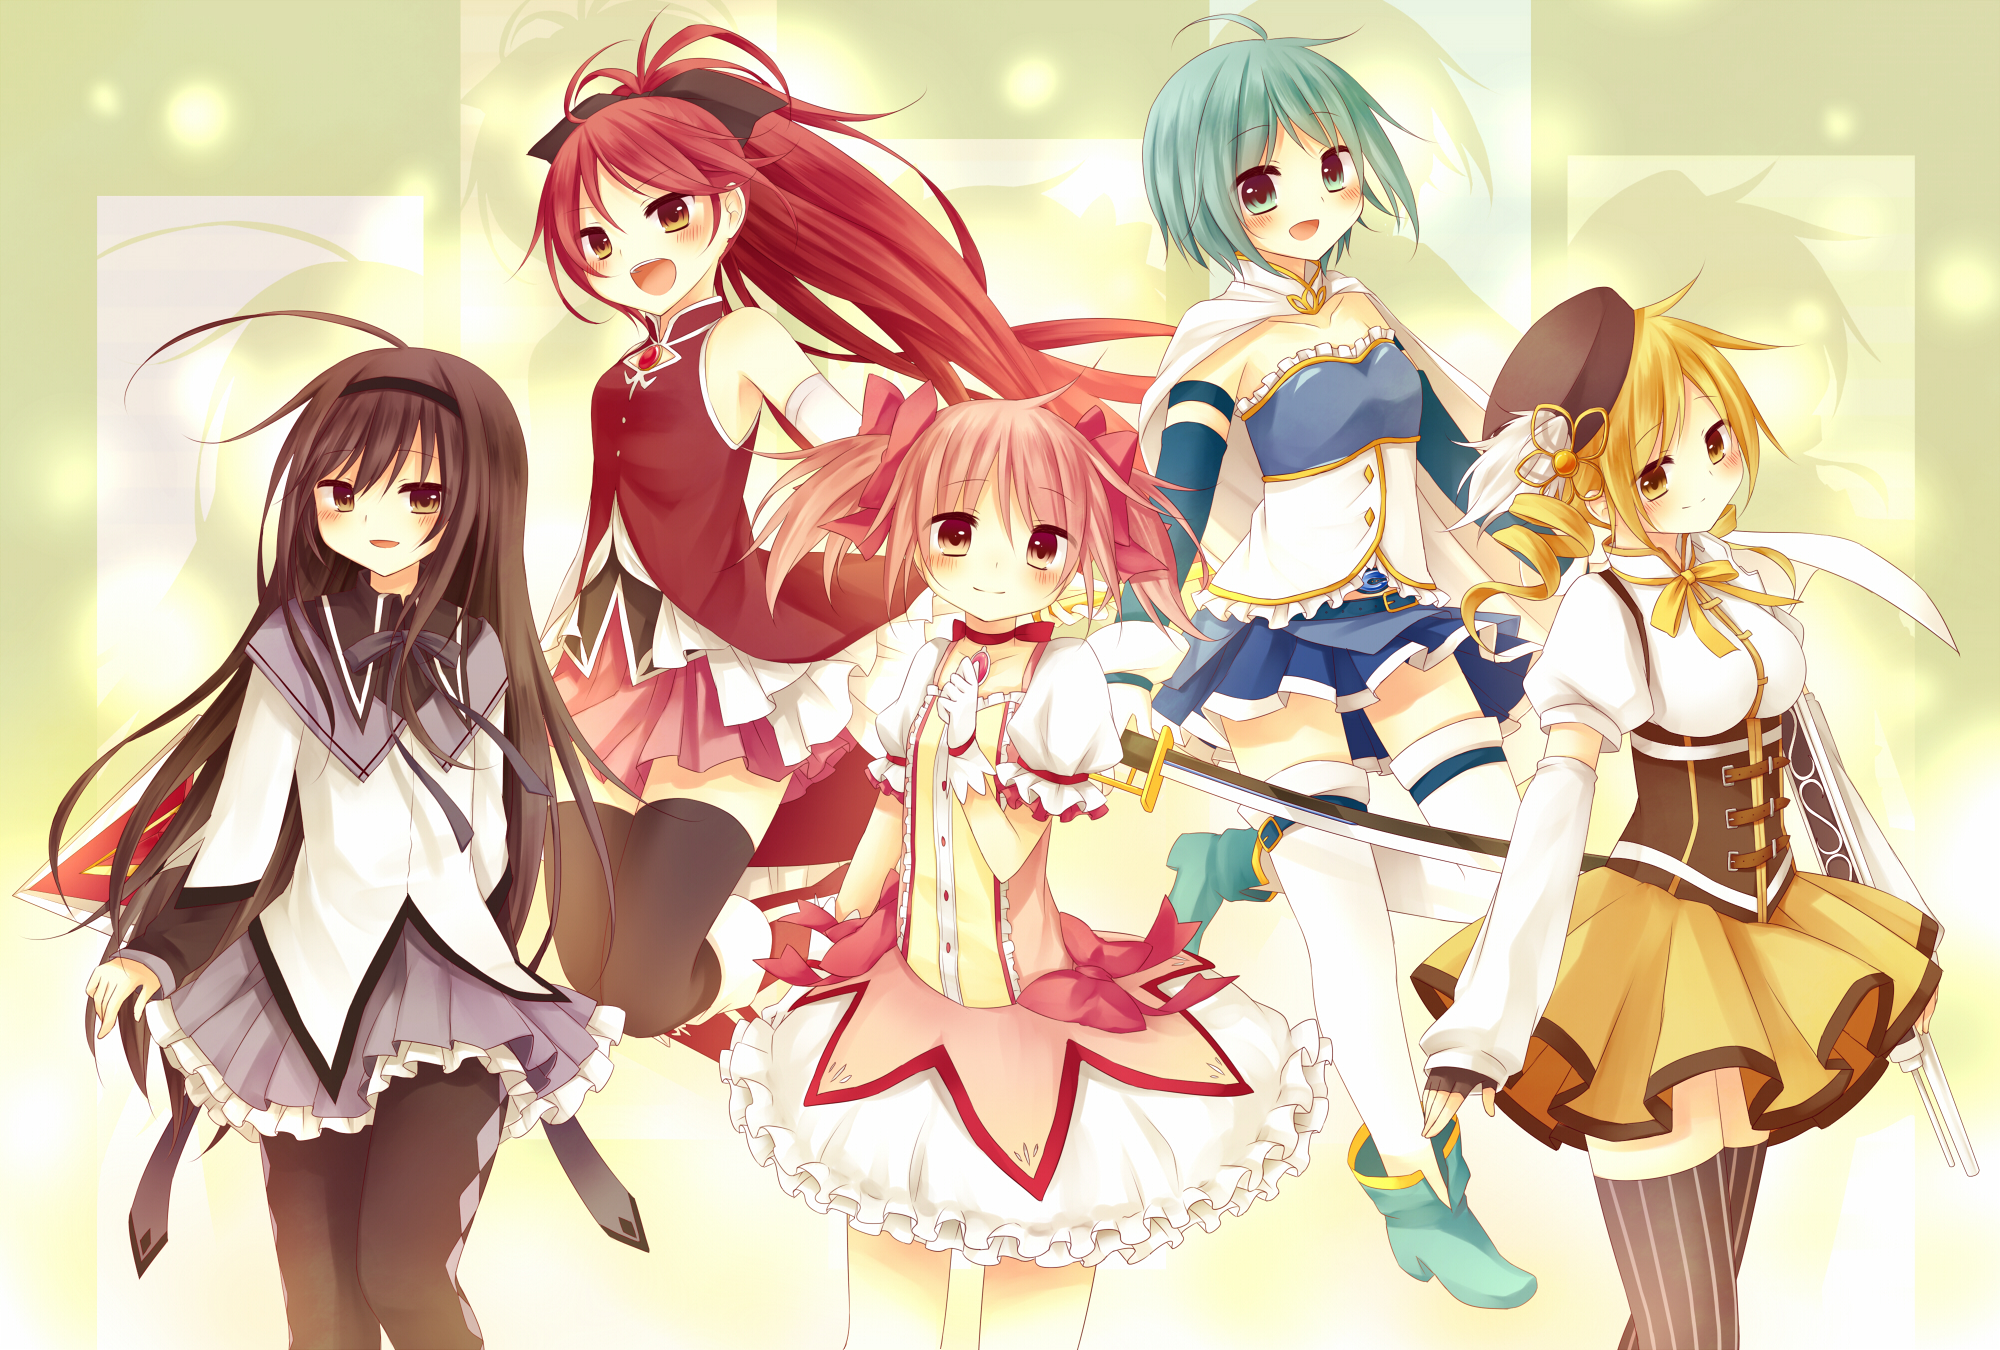 Téléchargez gratuitement l'image Animé, Kyōko Sakura, Puella Magi Madoka Magica, Homura Akemi, Madoka Kaname, Maman Tomoe, Sayaka Miki sur le bureau de votre PC